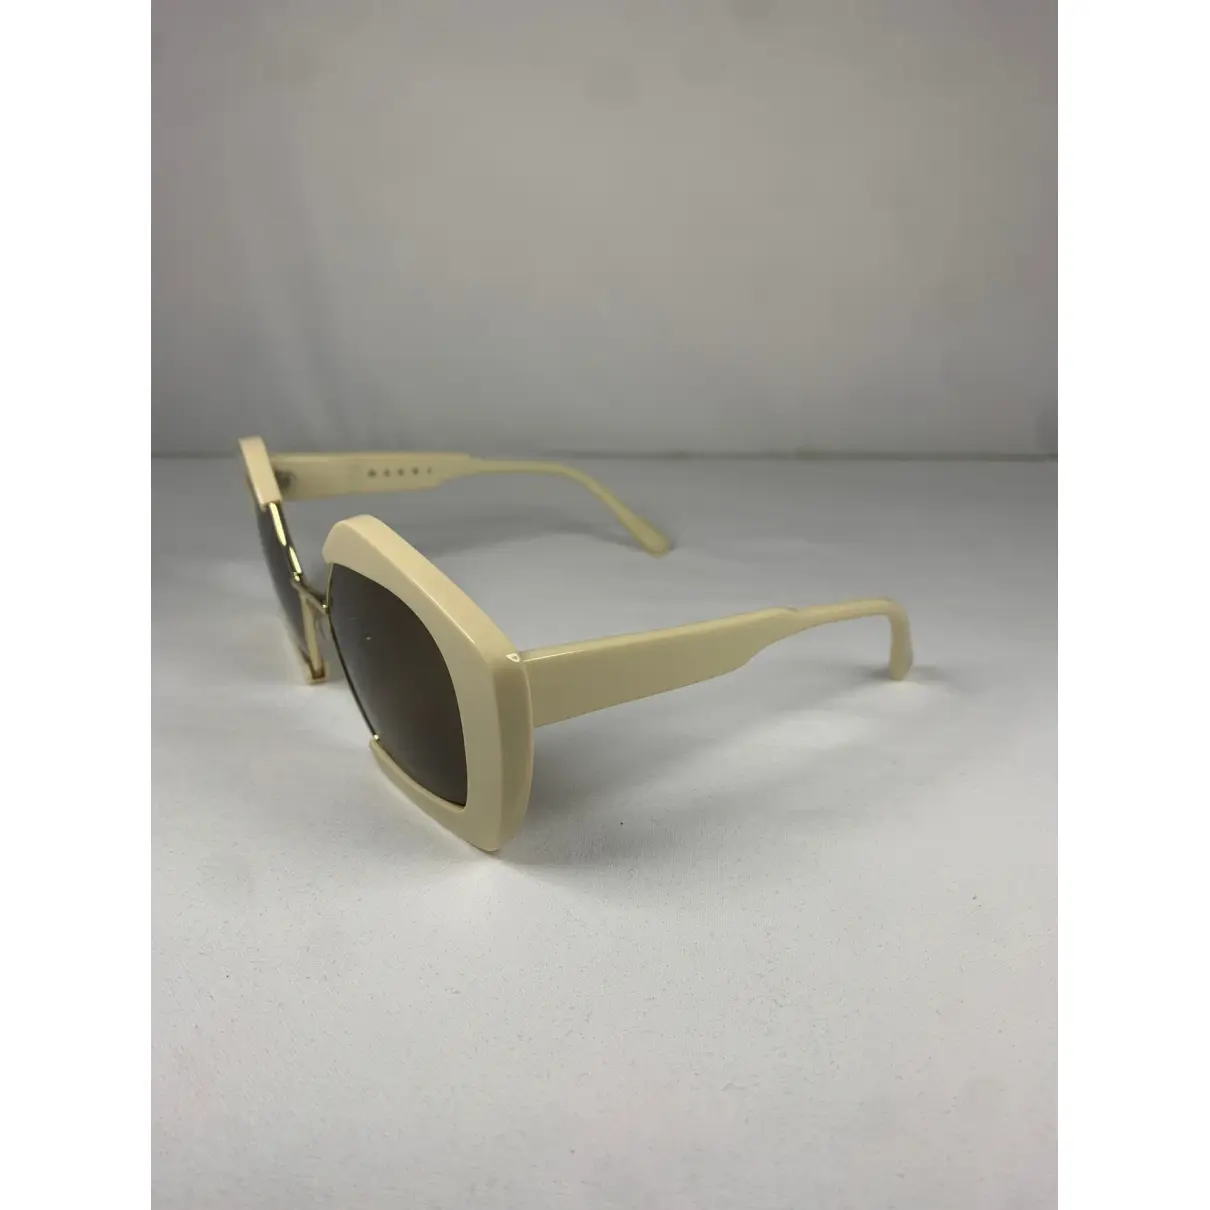 Buy Marni Sunglasses online